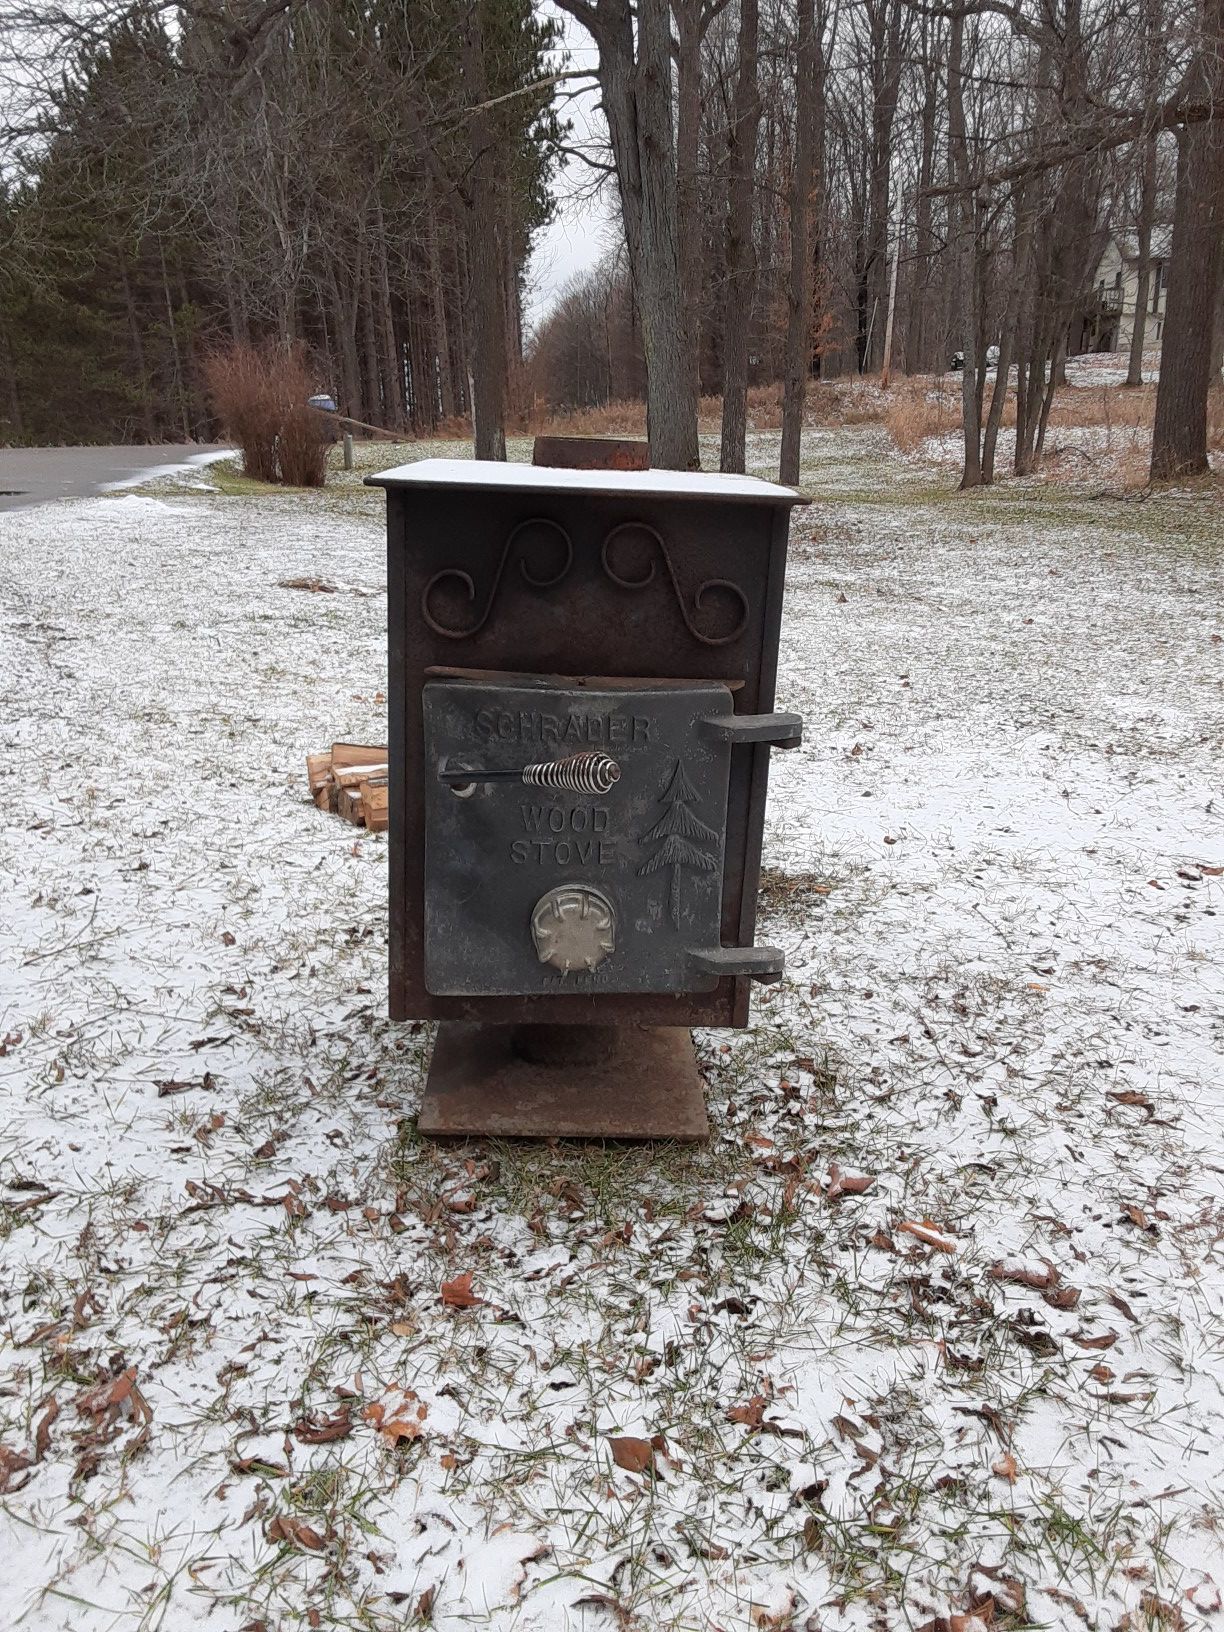 Schrader wood stove